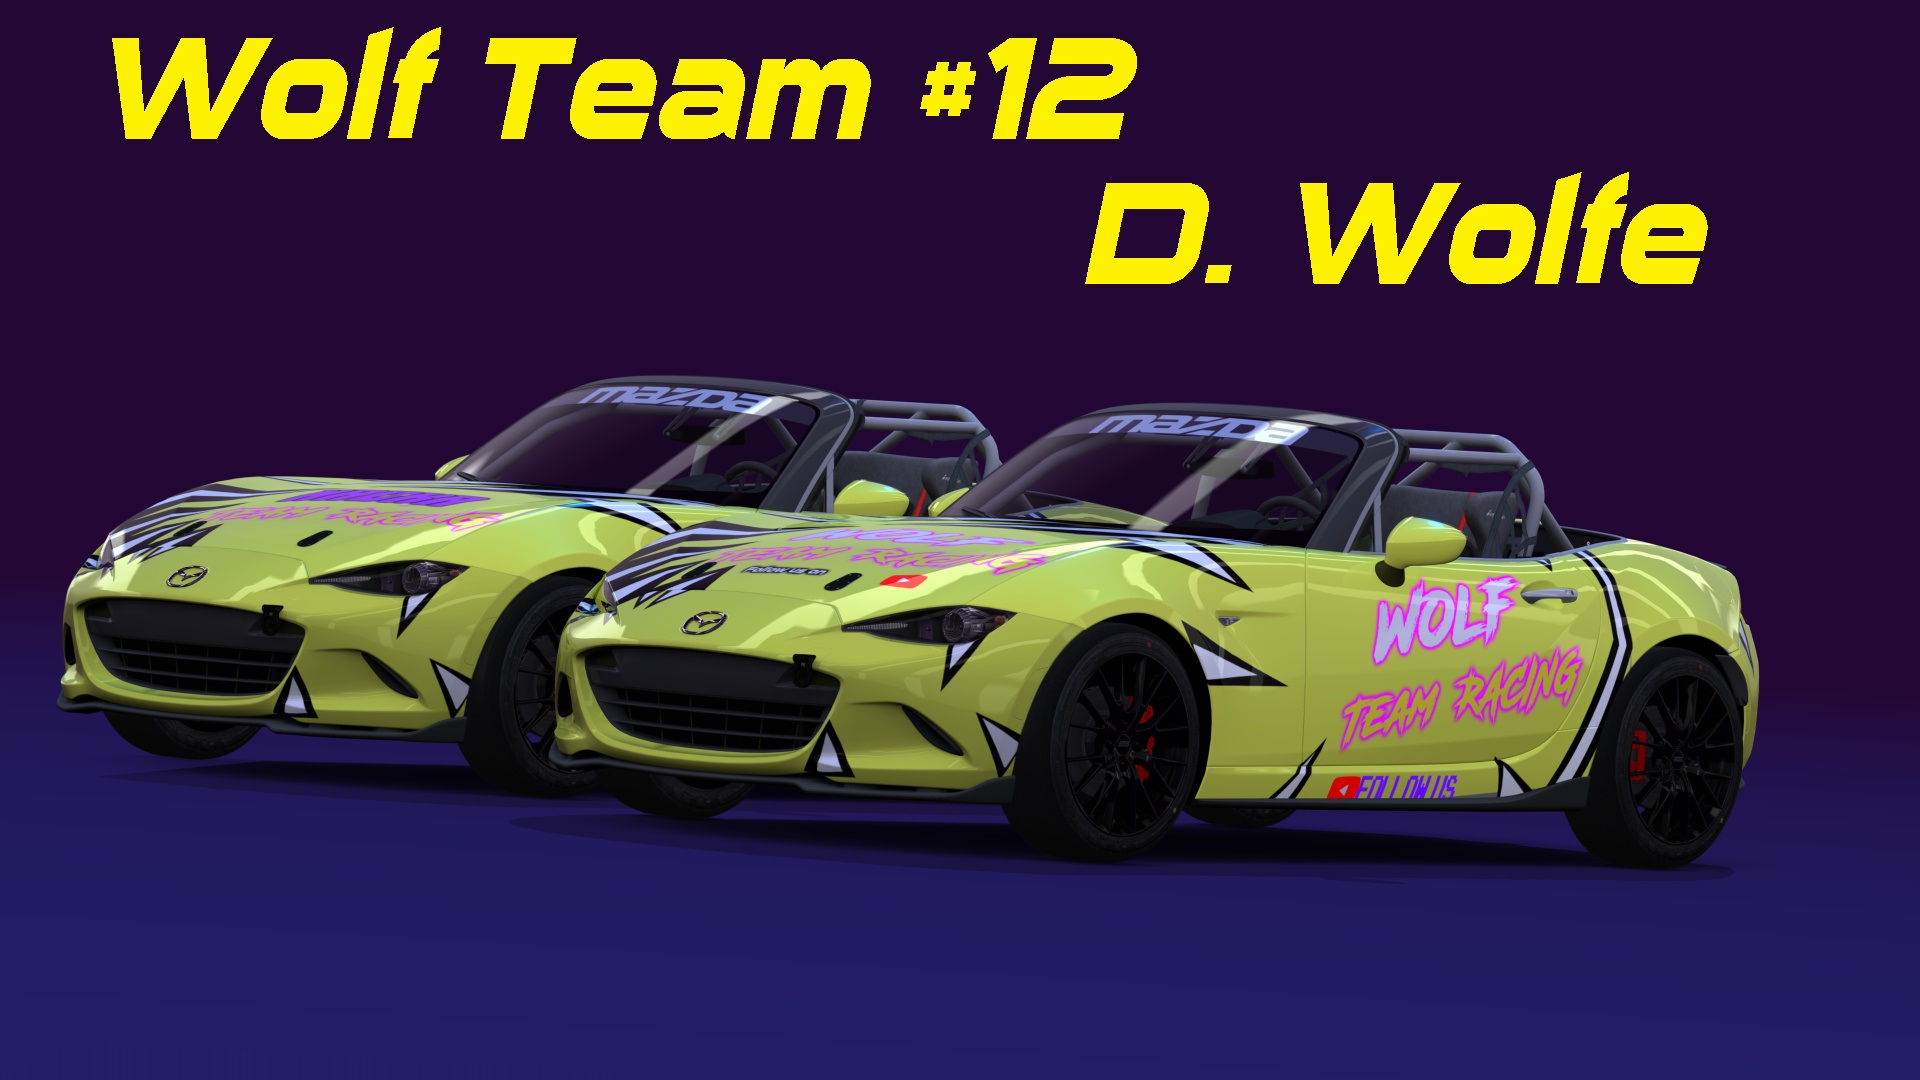 Mazda MX5 Cup AFX Ver., skin Wolf Team Racing - Daniel Wolfe